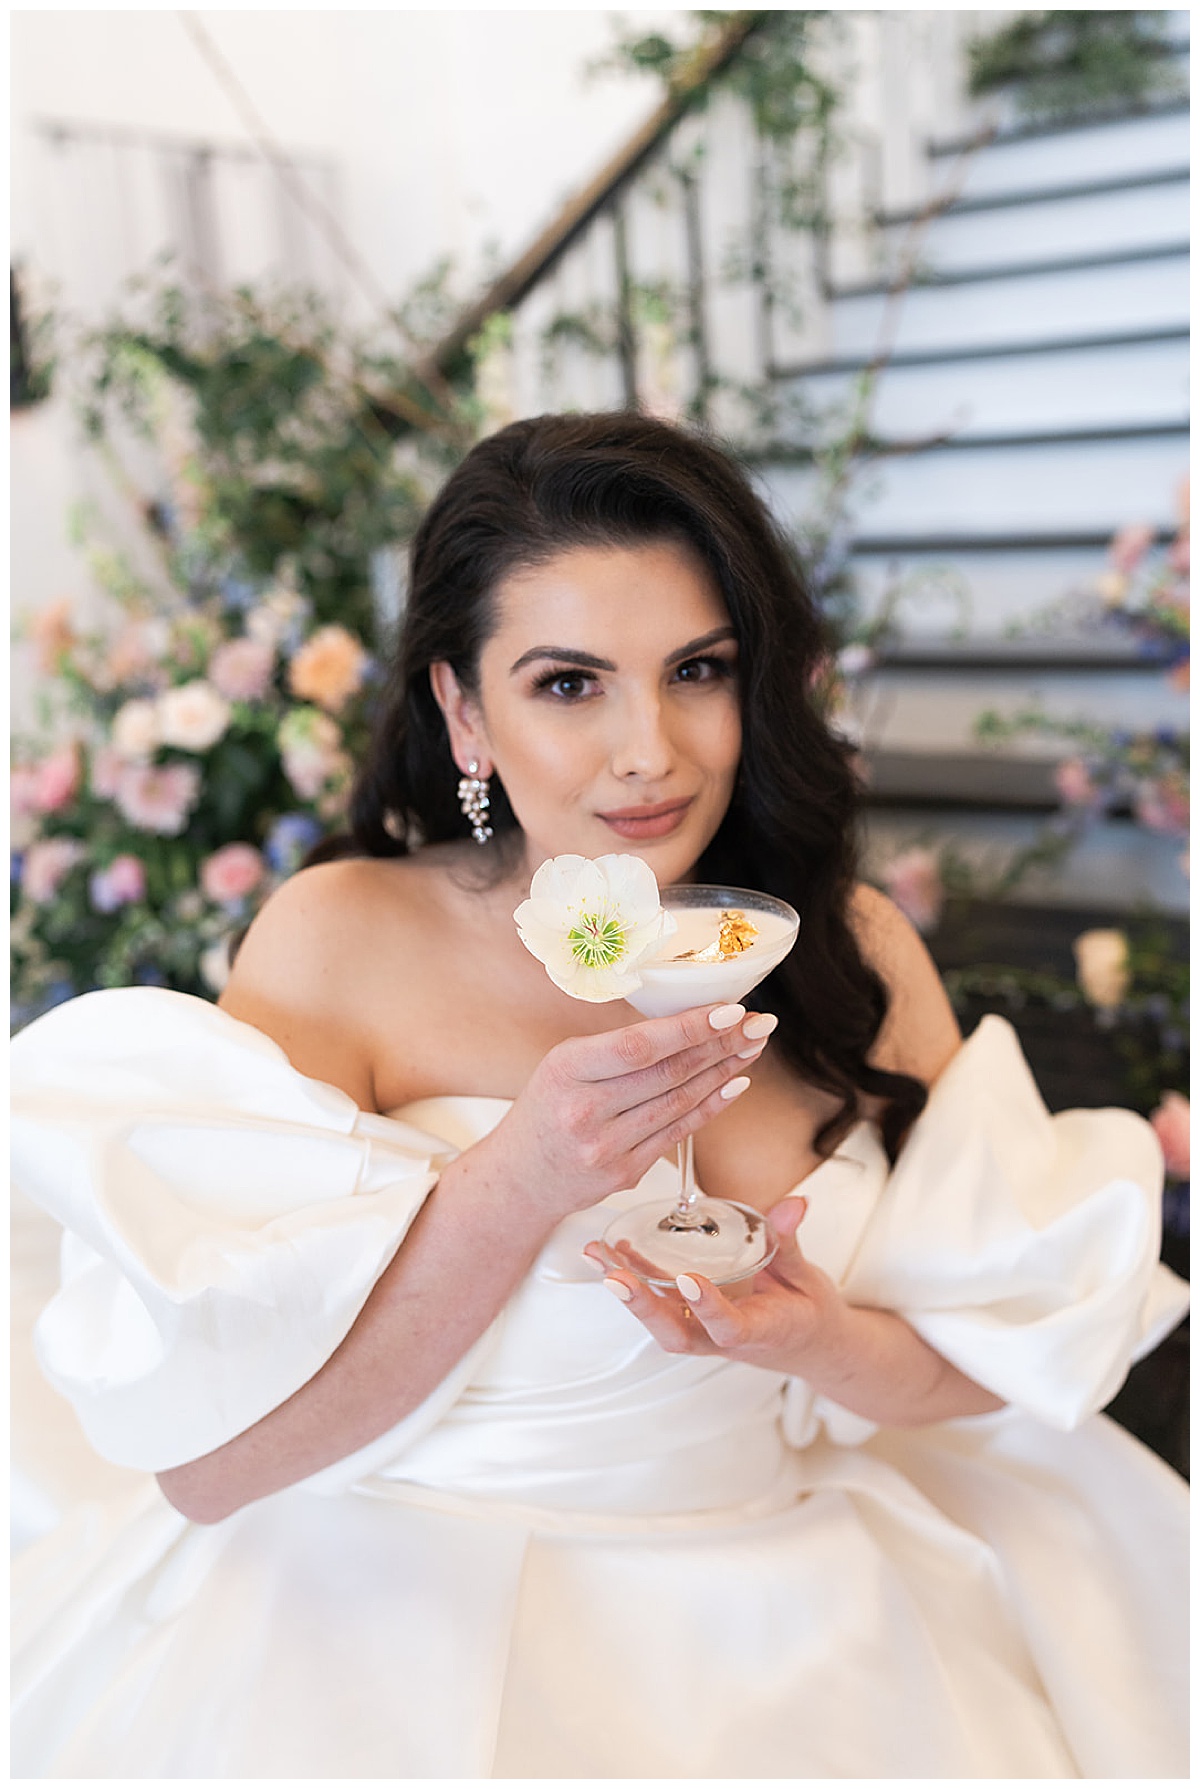 Woman drinks special wedding cocktail during Secret Garden Editorial